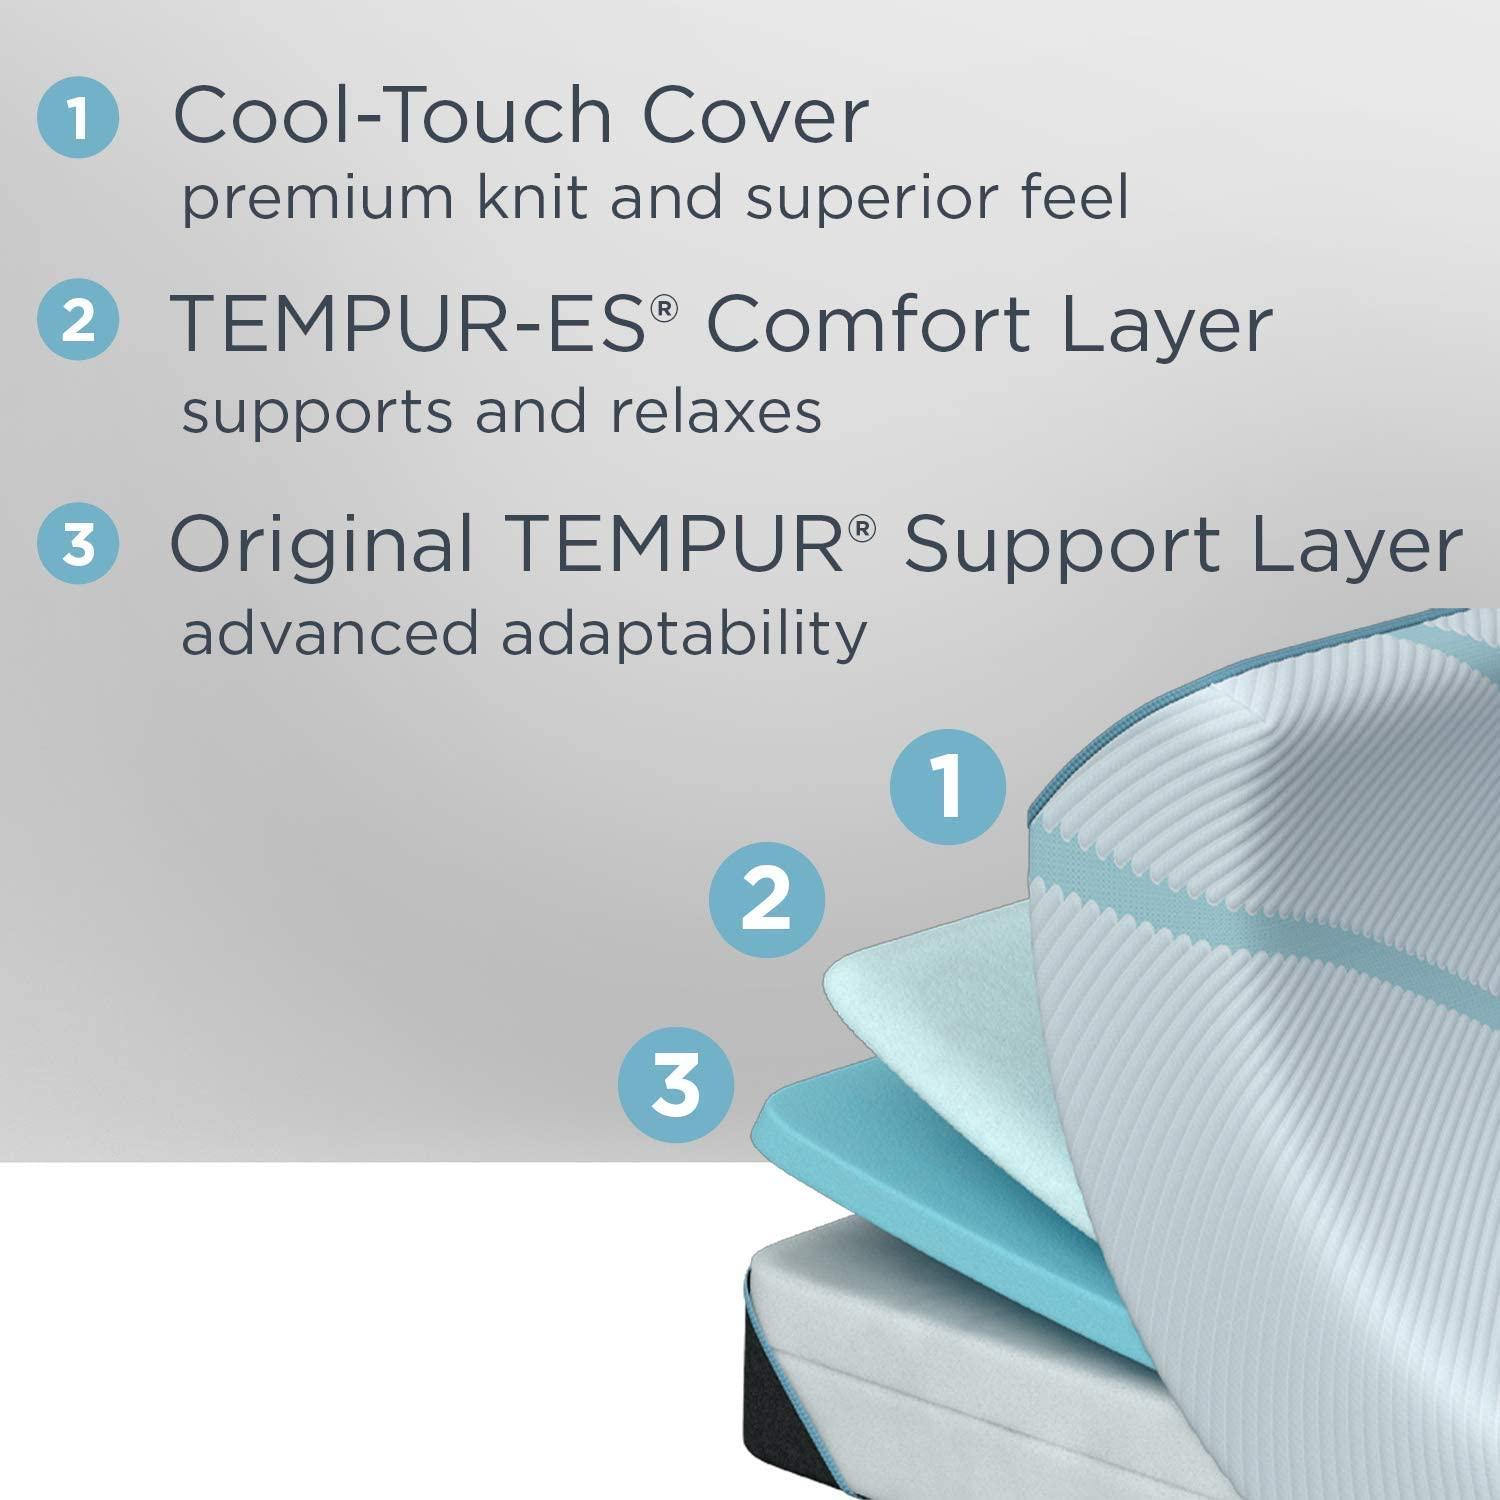 Tempurpedic mattresses last about 10 years. Here are the layers of tempurpedic mattresses. 